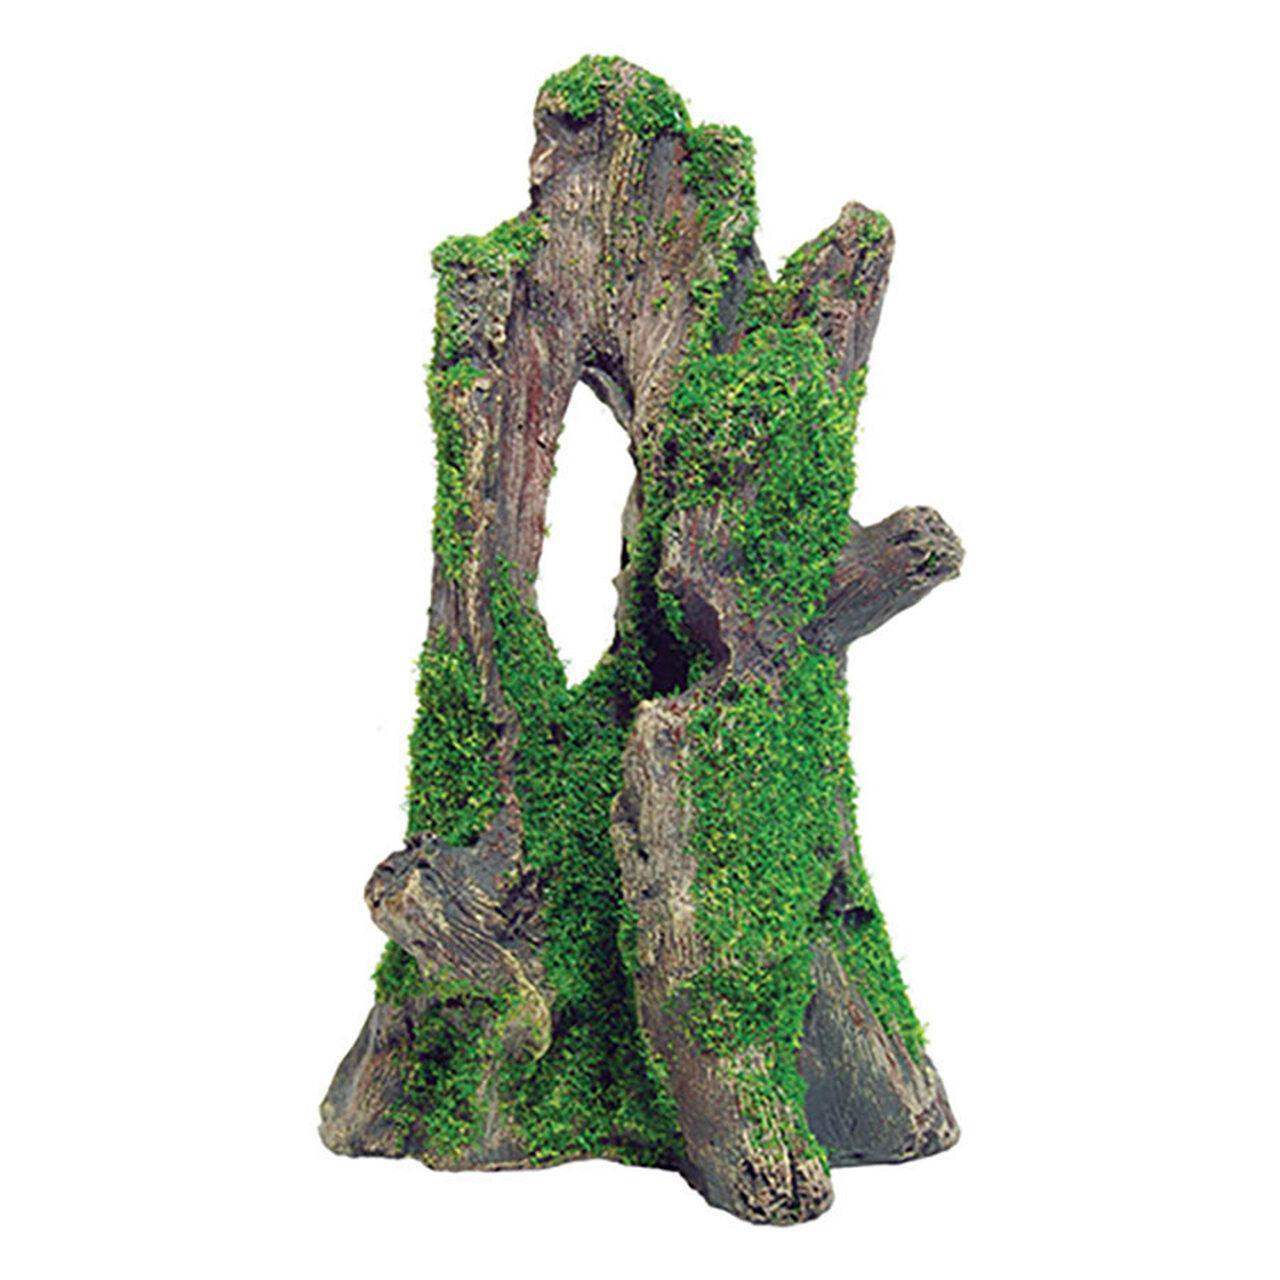 AquaSpectra Tree Stump with Moss